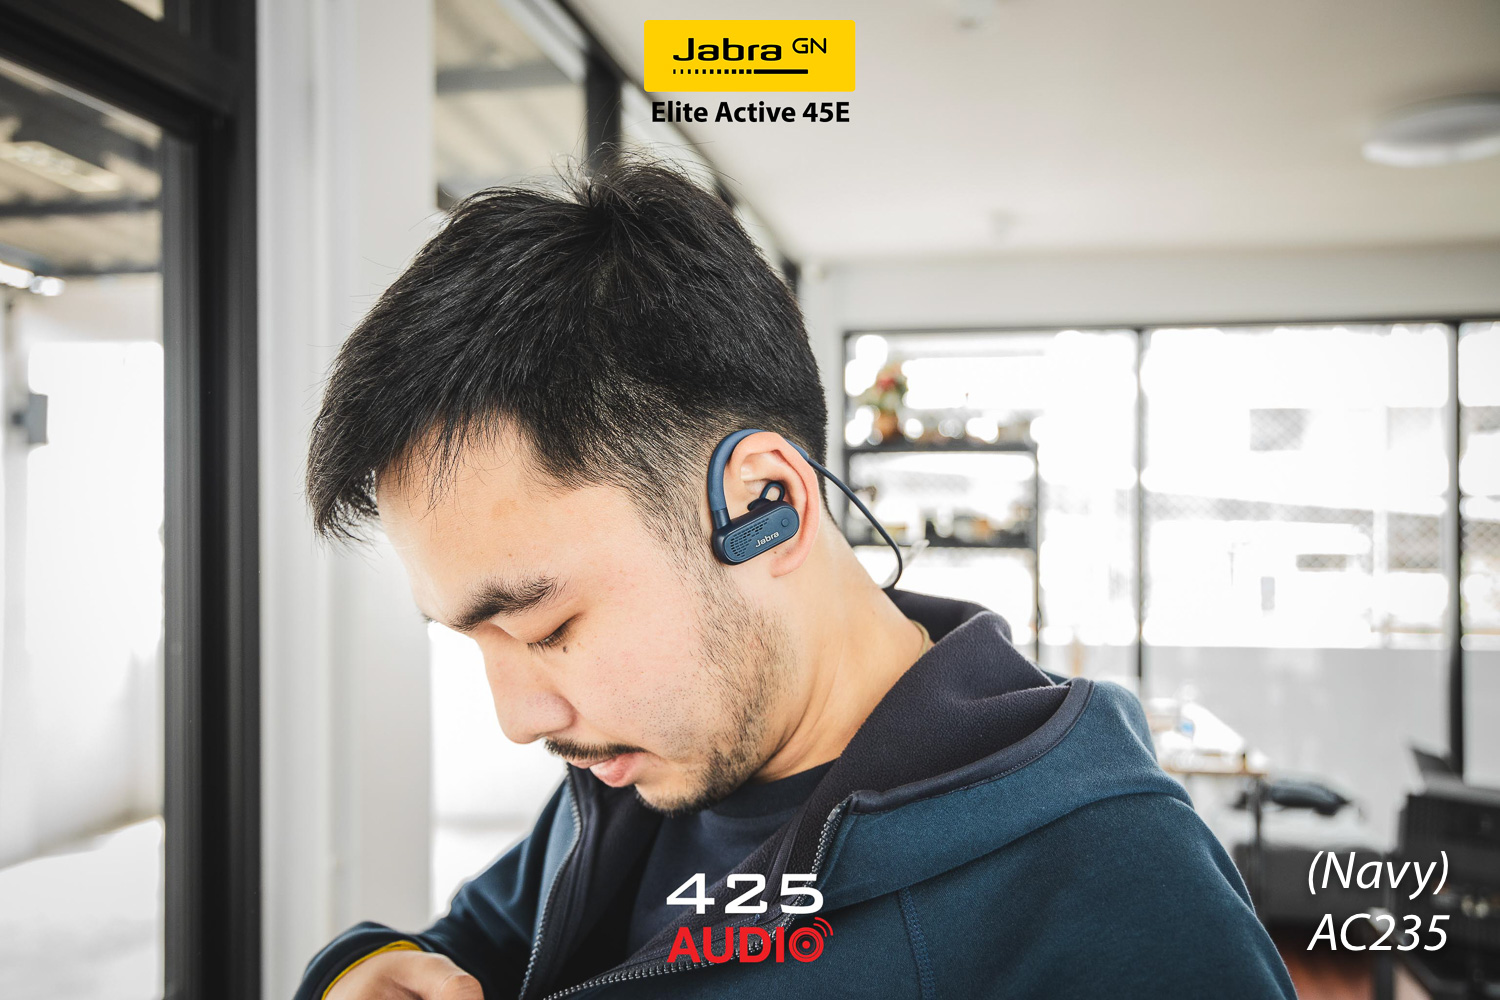 earphone,jabra,sport,bluetooth5.0,wirelesssport,exercise,IP67,fit,comfortable,stereo,HiFi,earbud,eliteactive45e,iOS,android